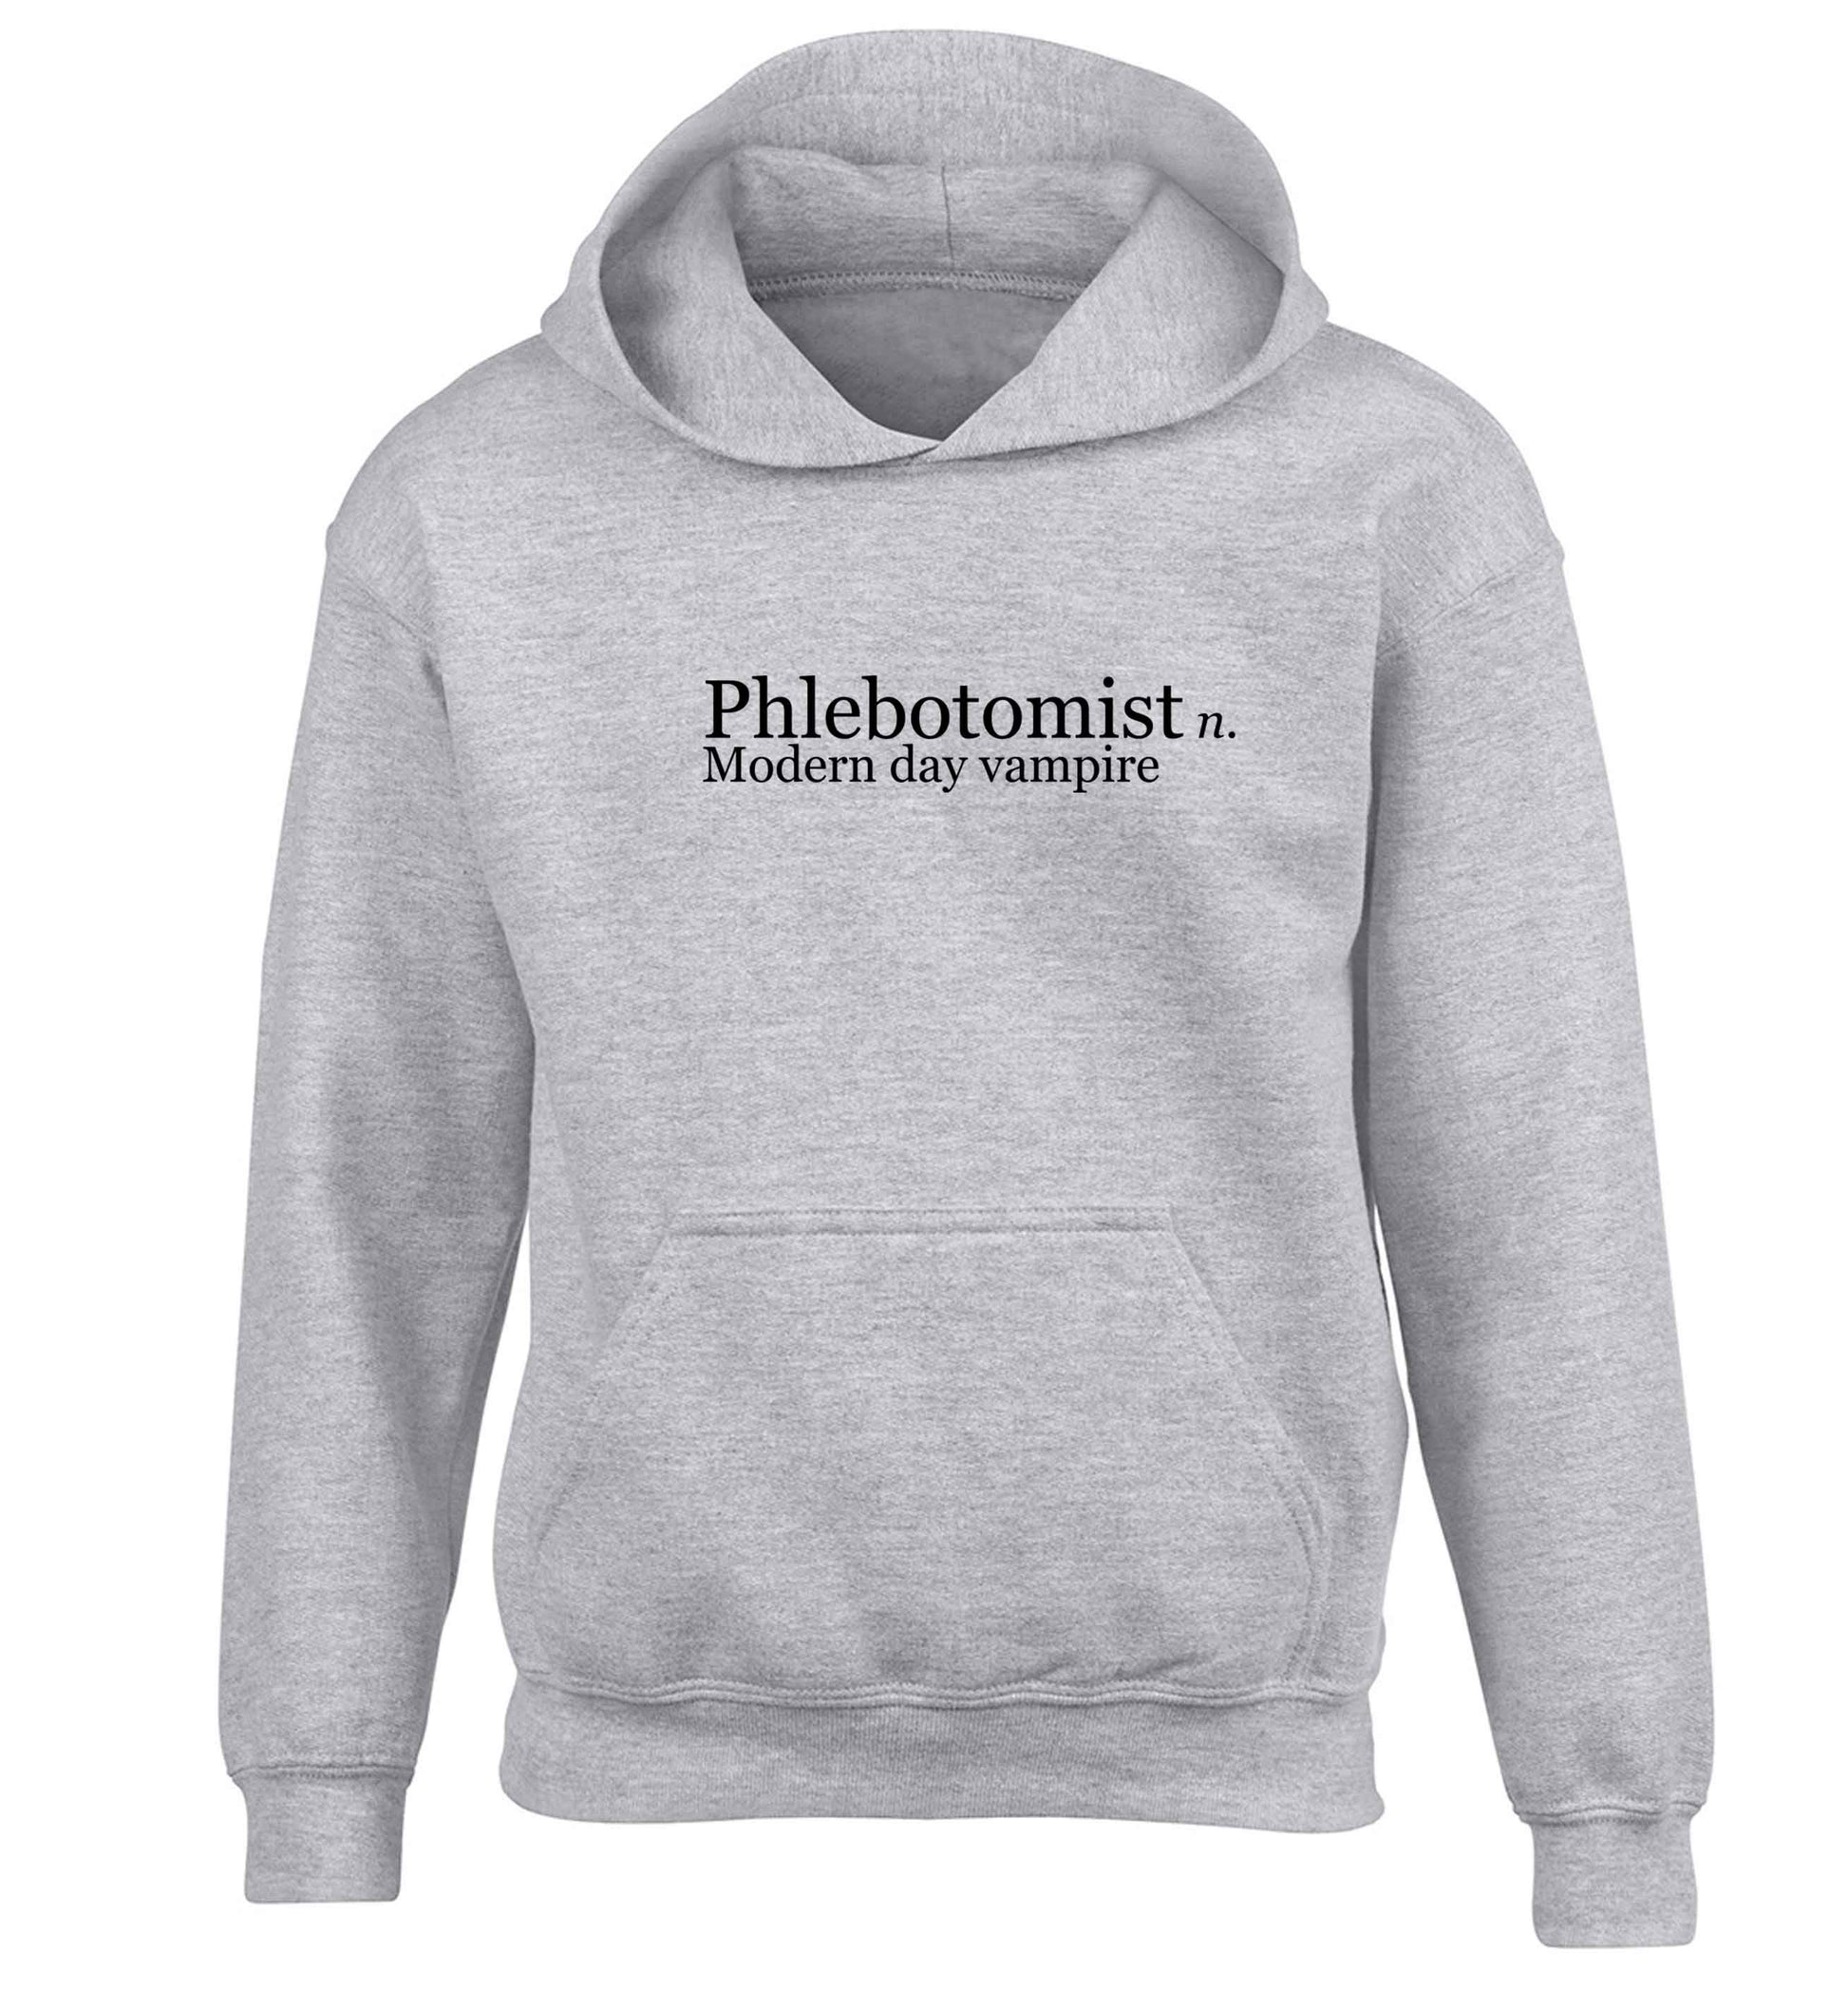 Phlebotomist - Modern day vampire children's grey hoodie 12-13 Years